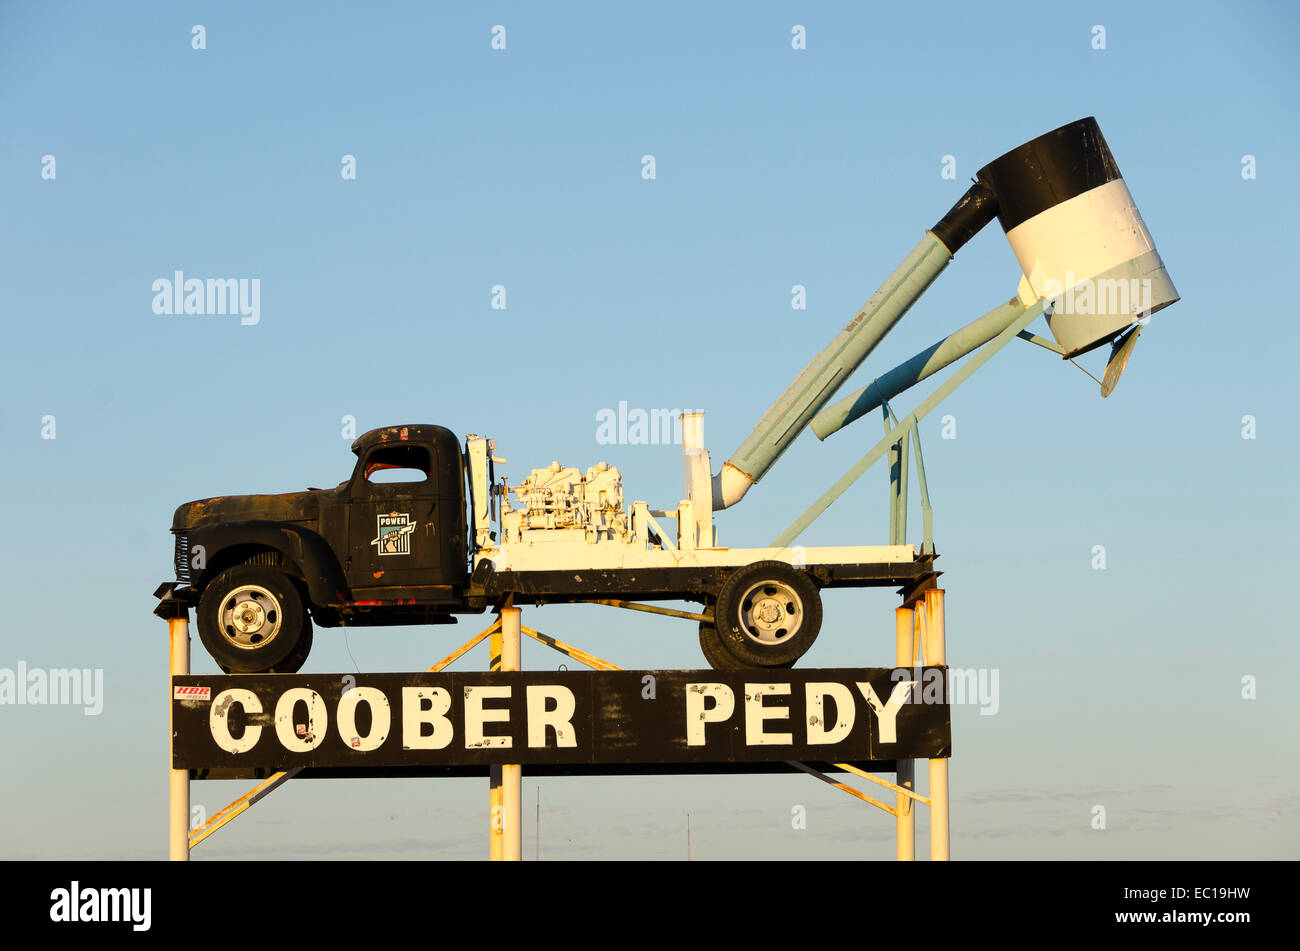 mining truck, sign, Coober Pedy, South Australia Stock Photo